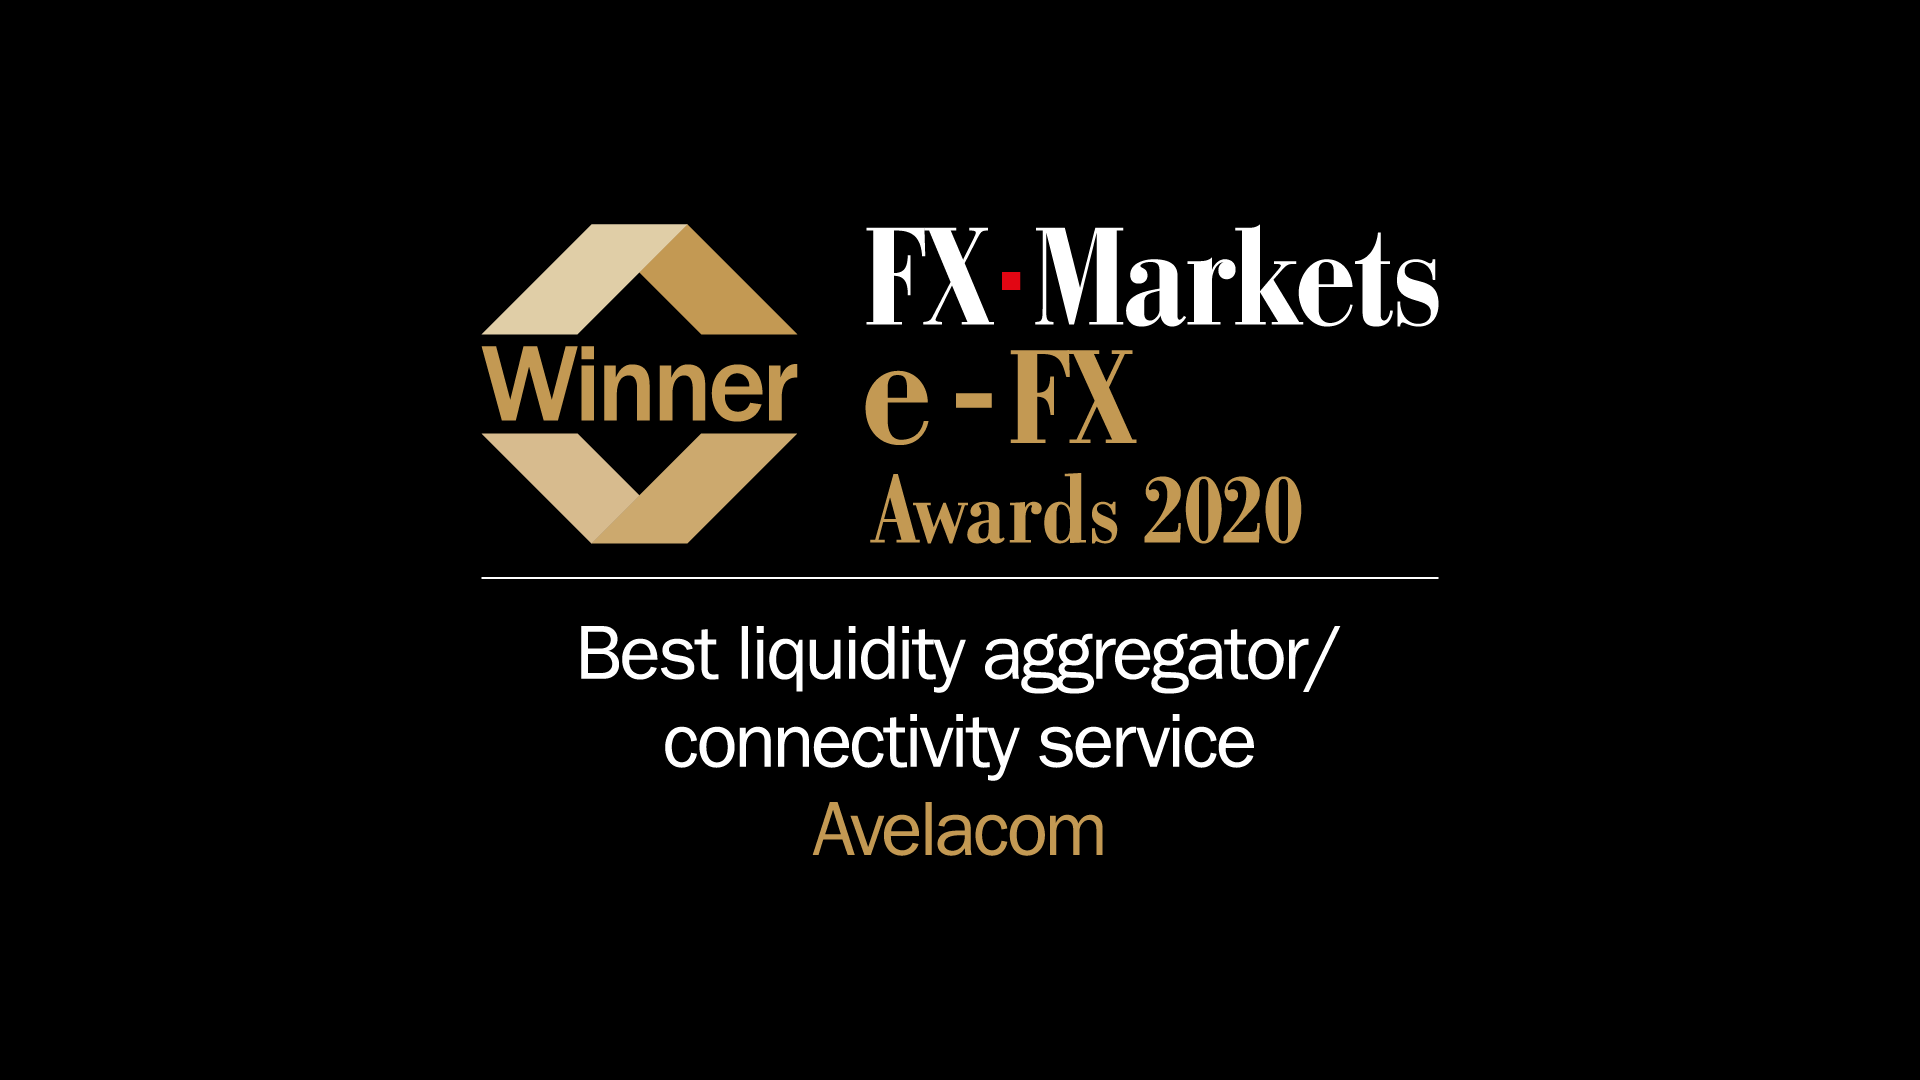 Avelacom wins FX Markets e-FX Award